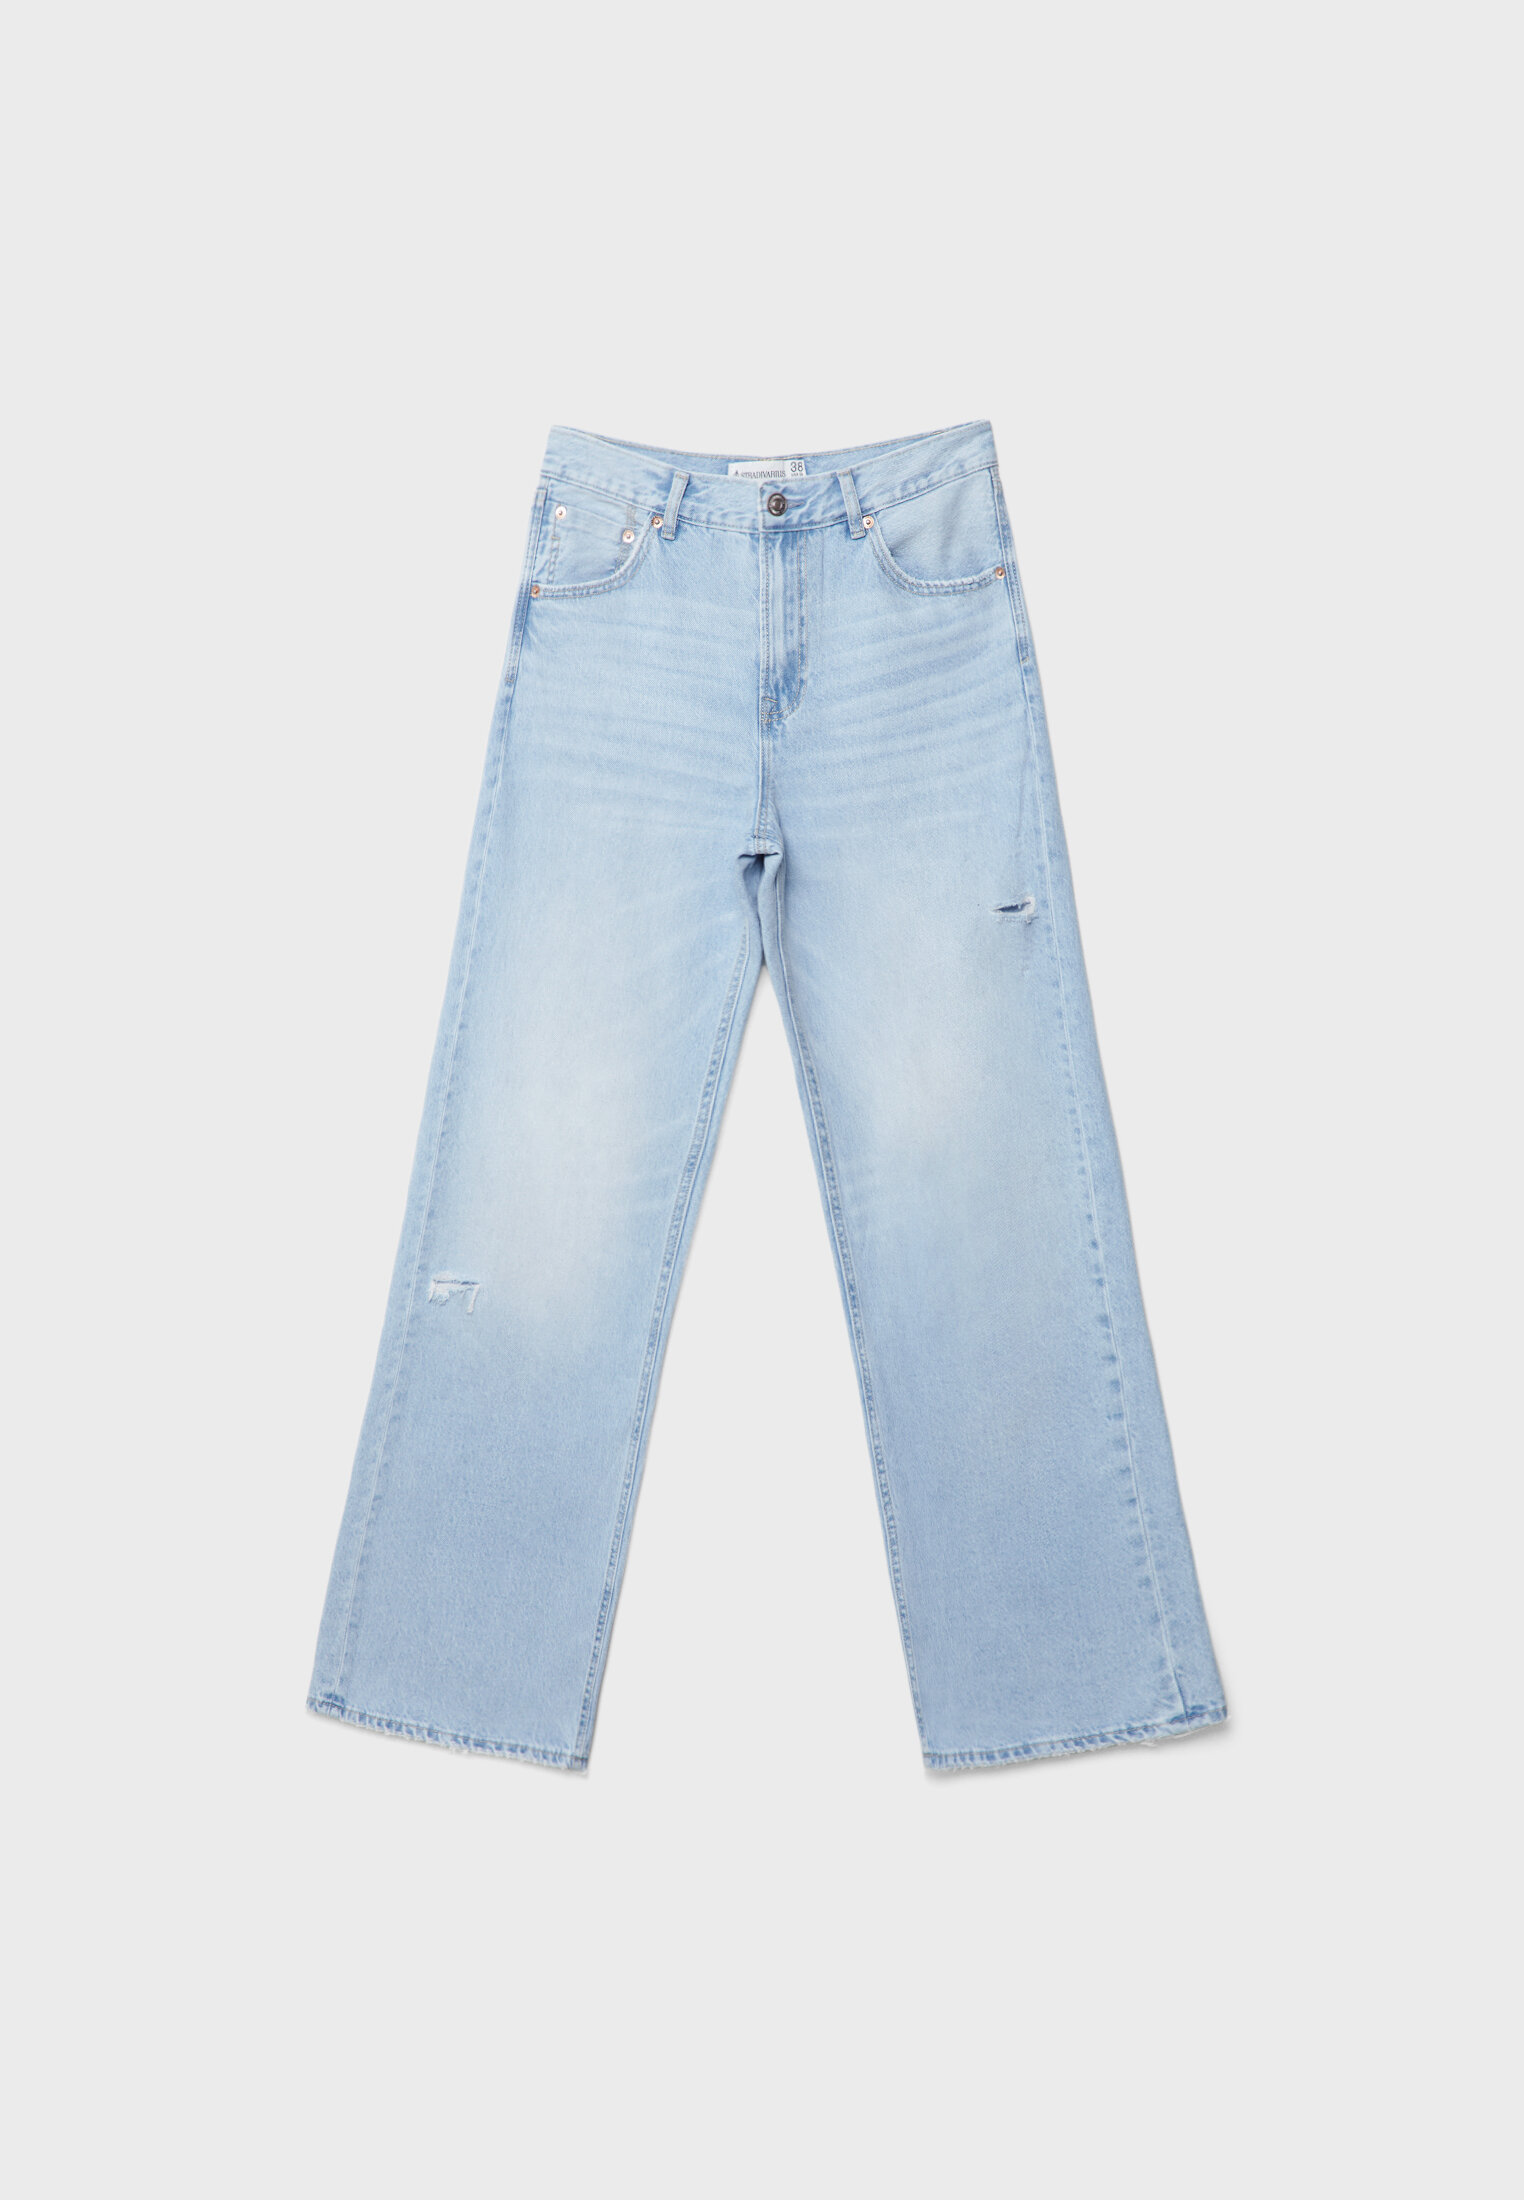 Adjustable straight-fit carpenter jeans - Women's fashion 